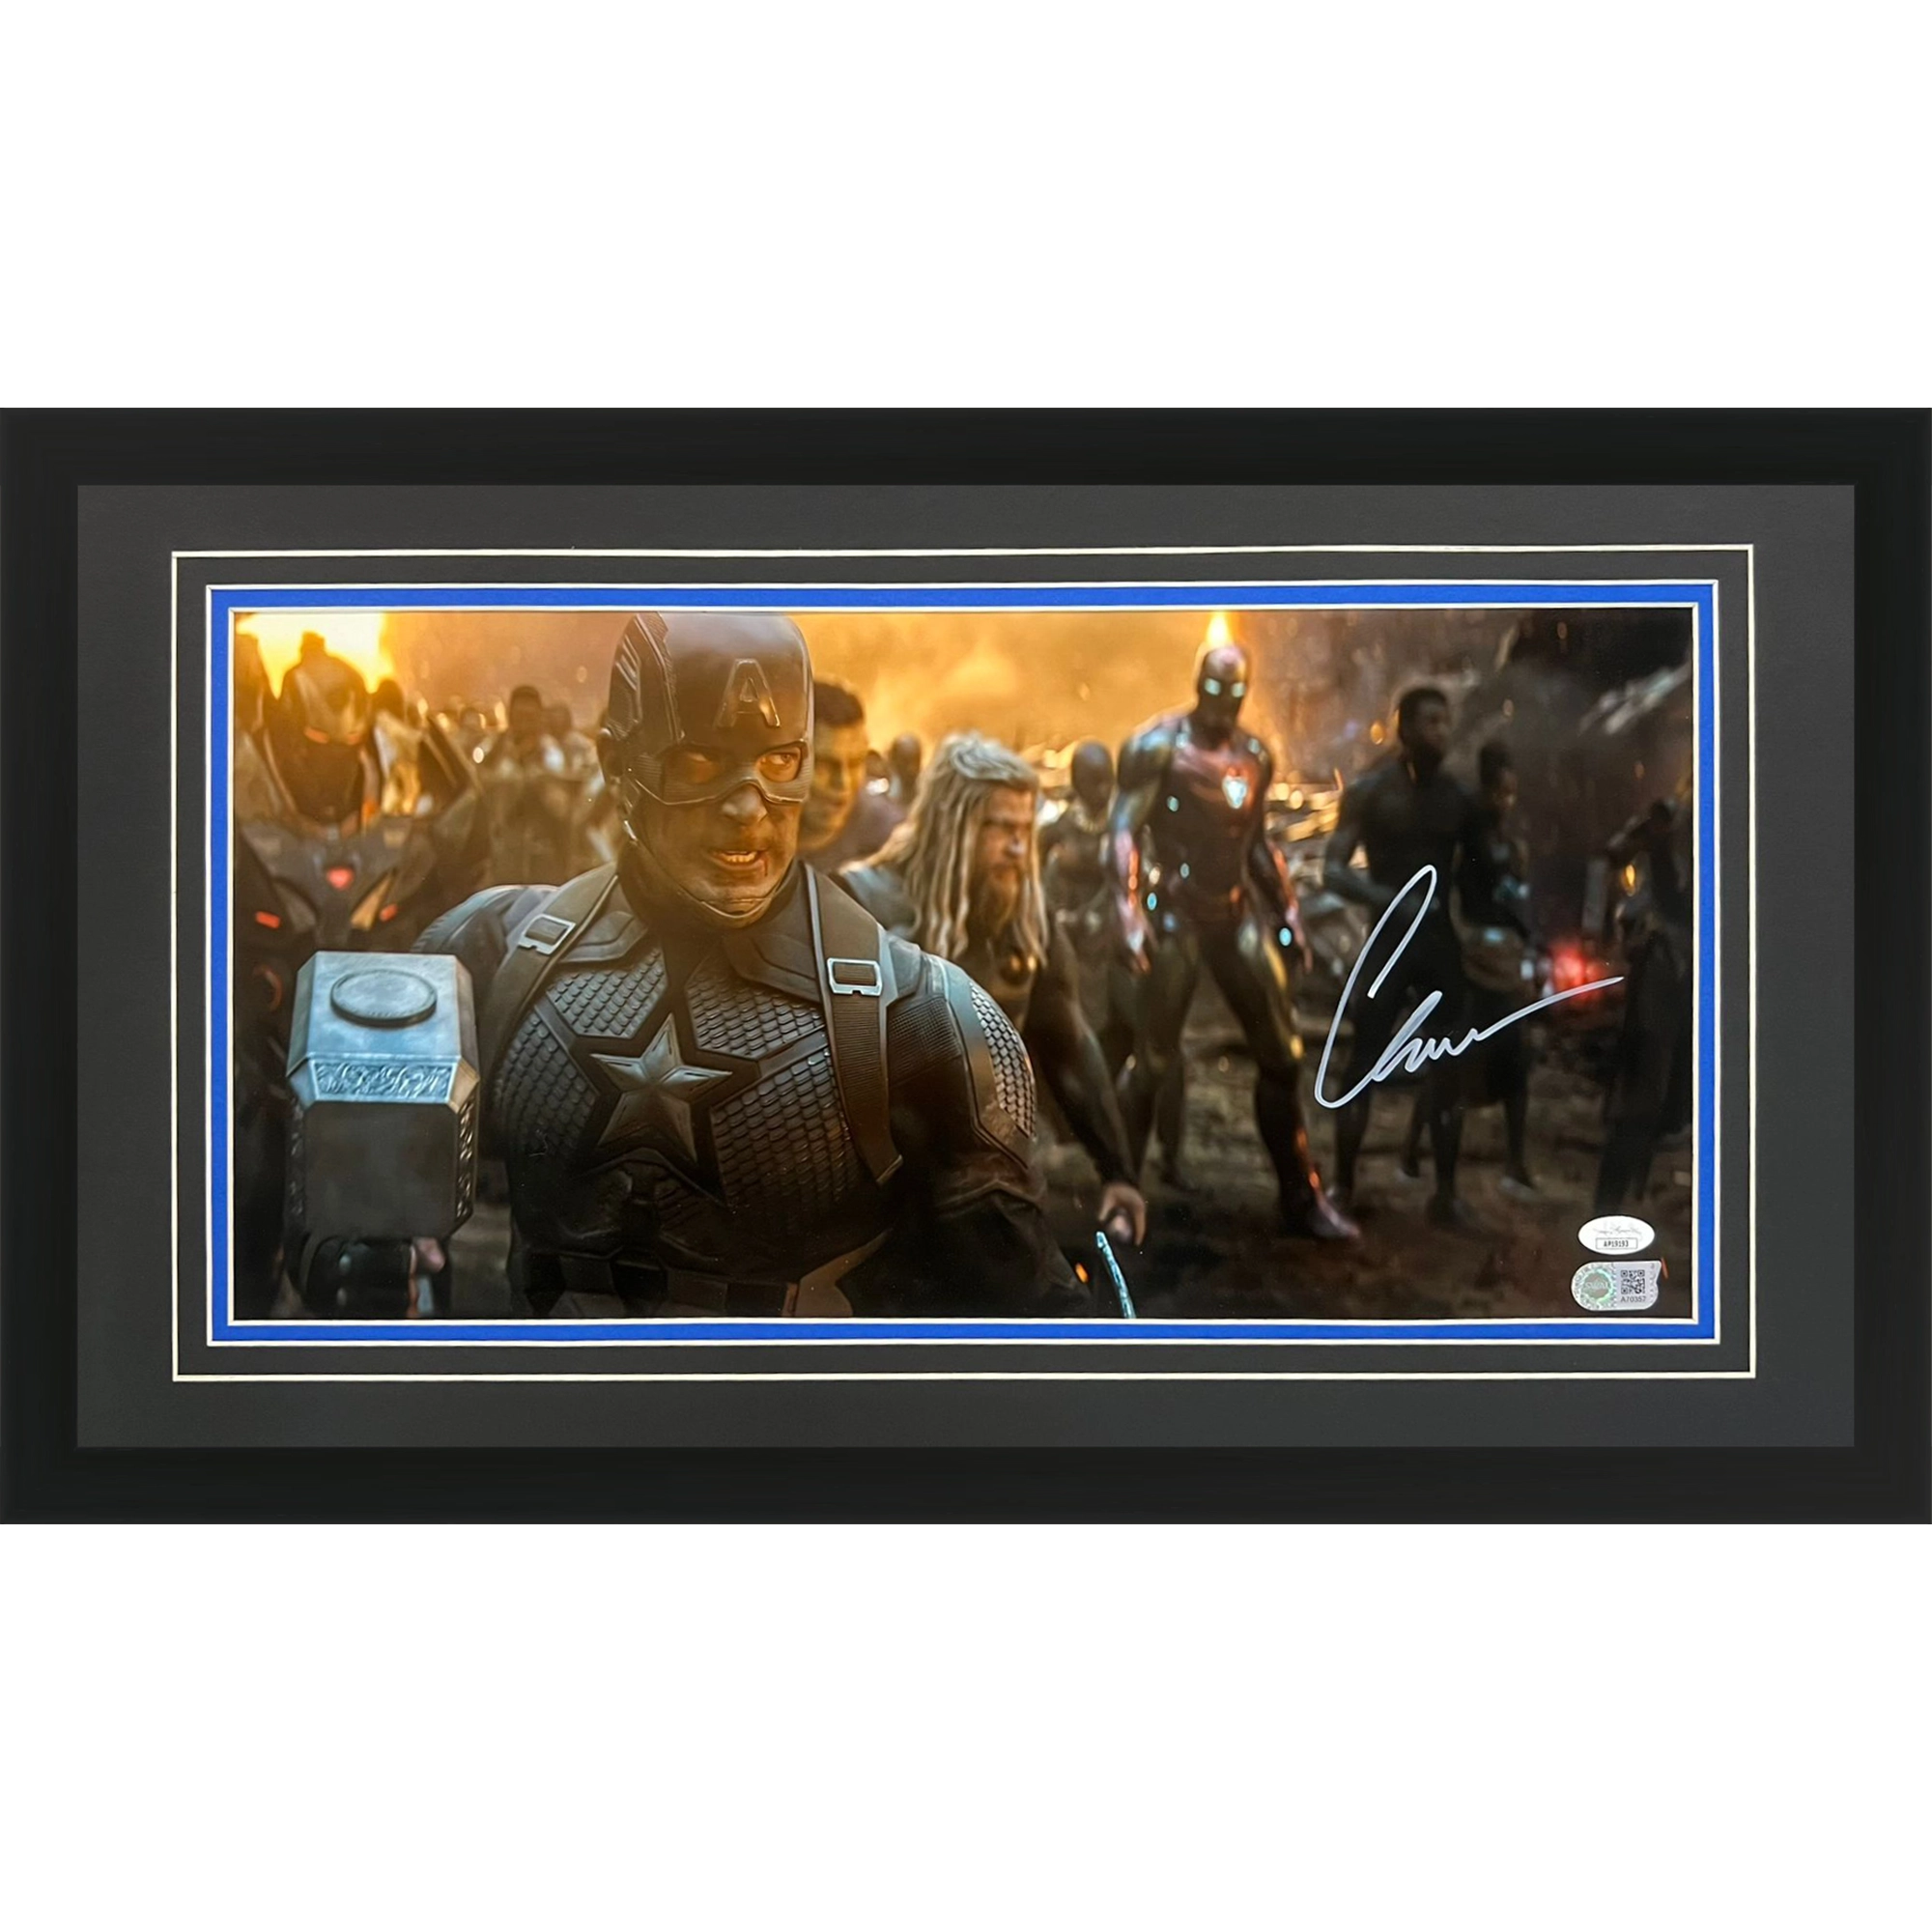 Chris Evans Autographed Marvel Captain America Deluxe Framed 10x20 Photo - SWAU JSA